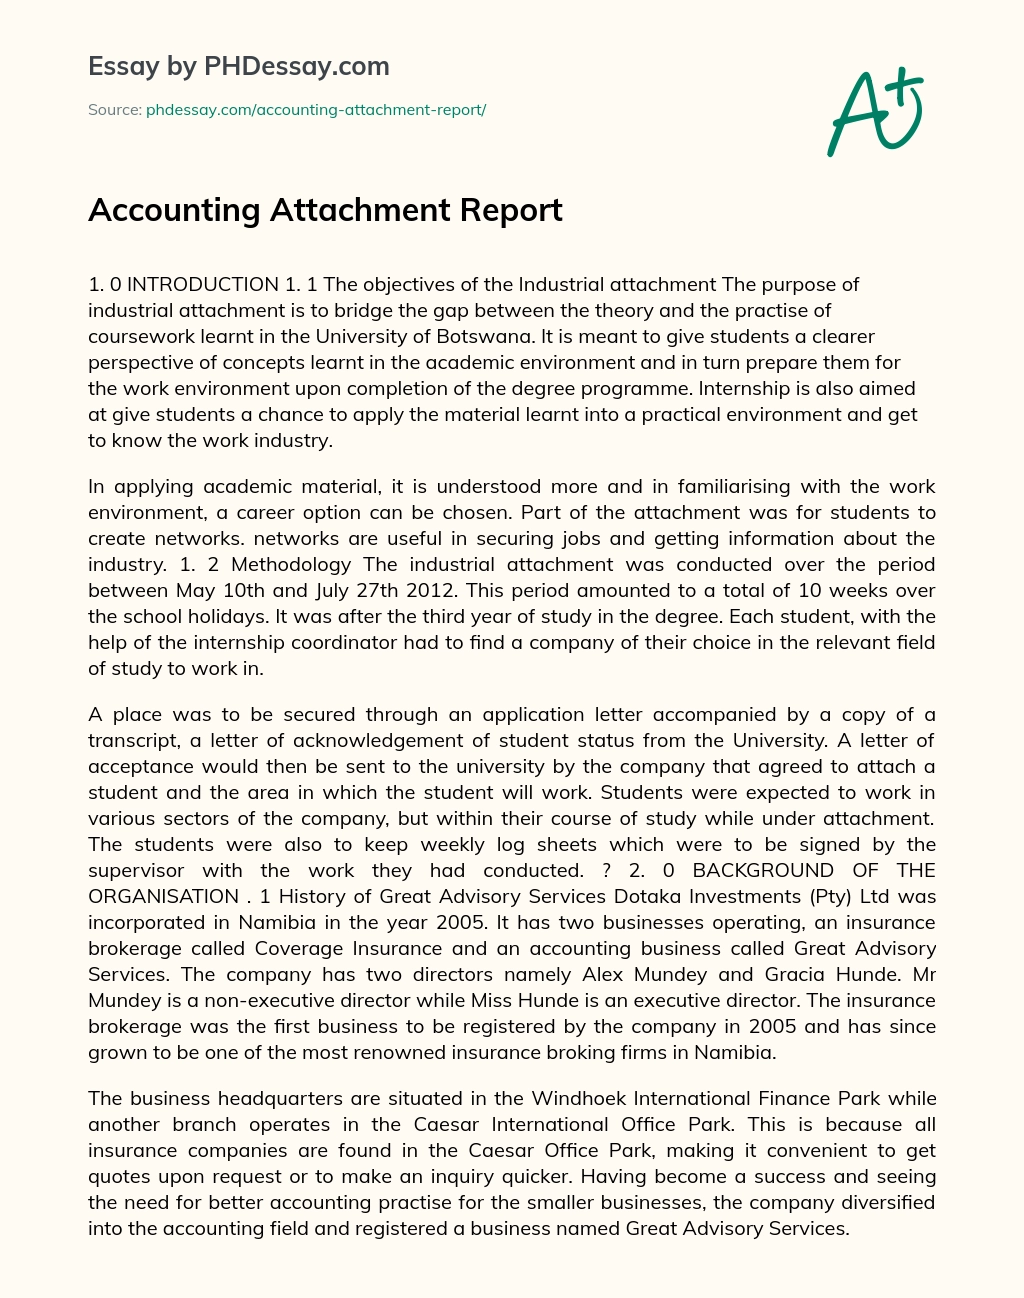 Accounting Attachment Report essay